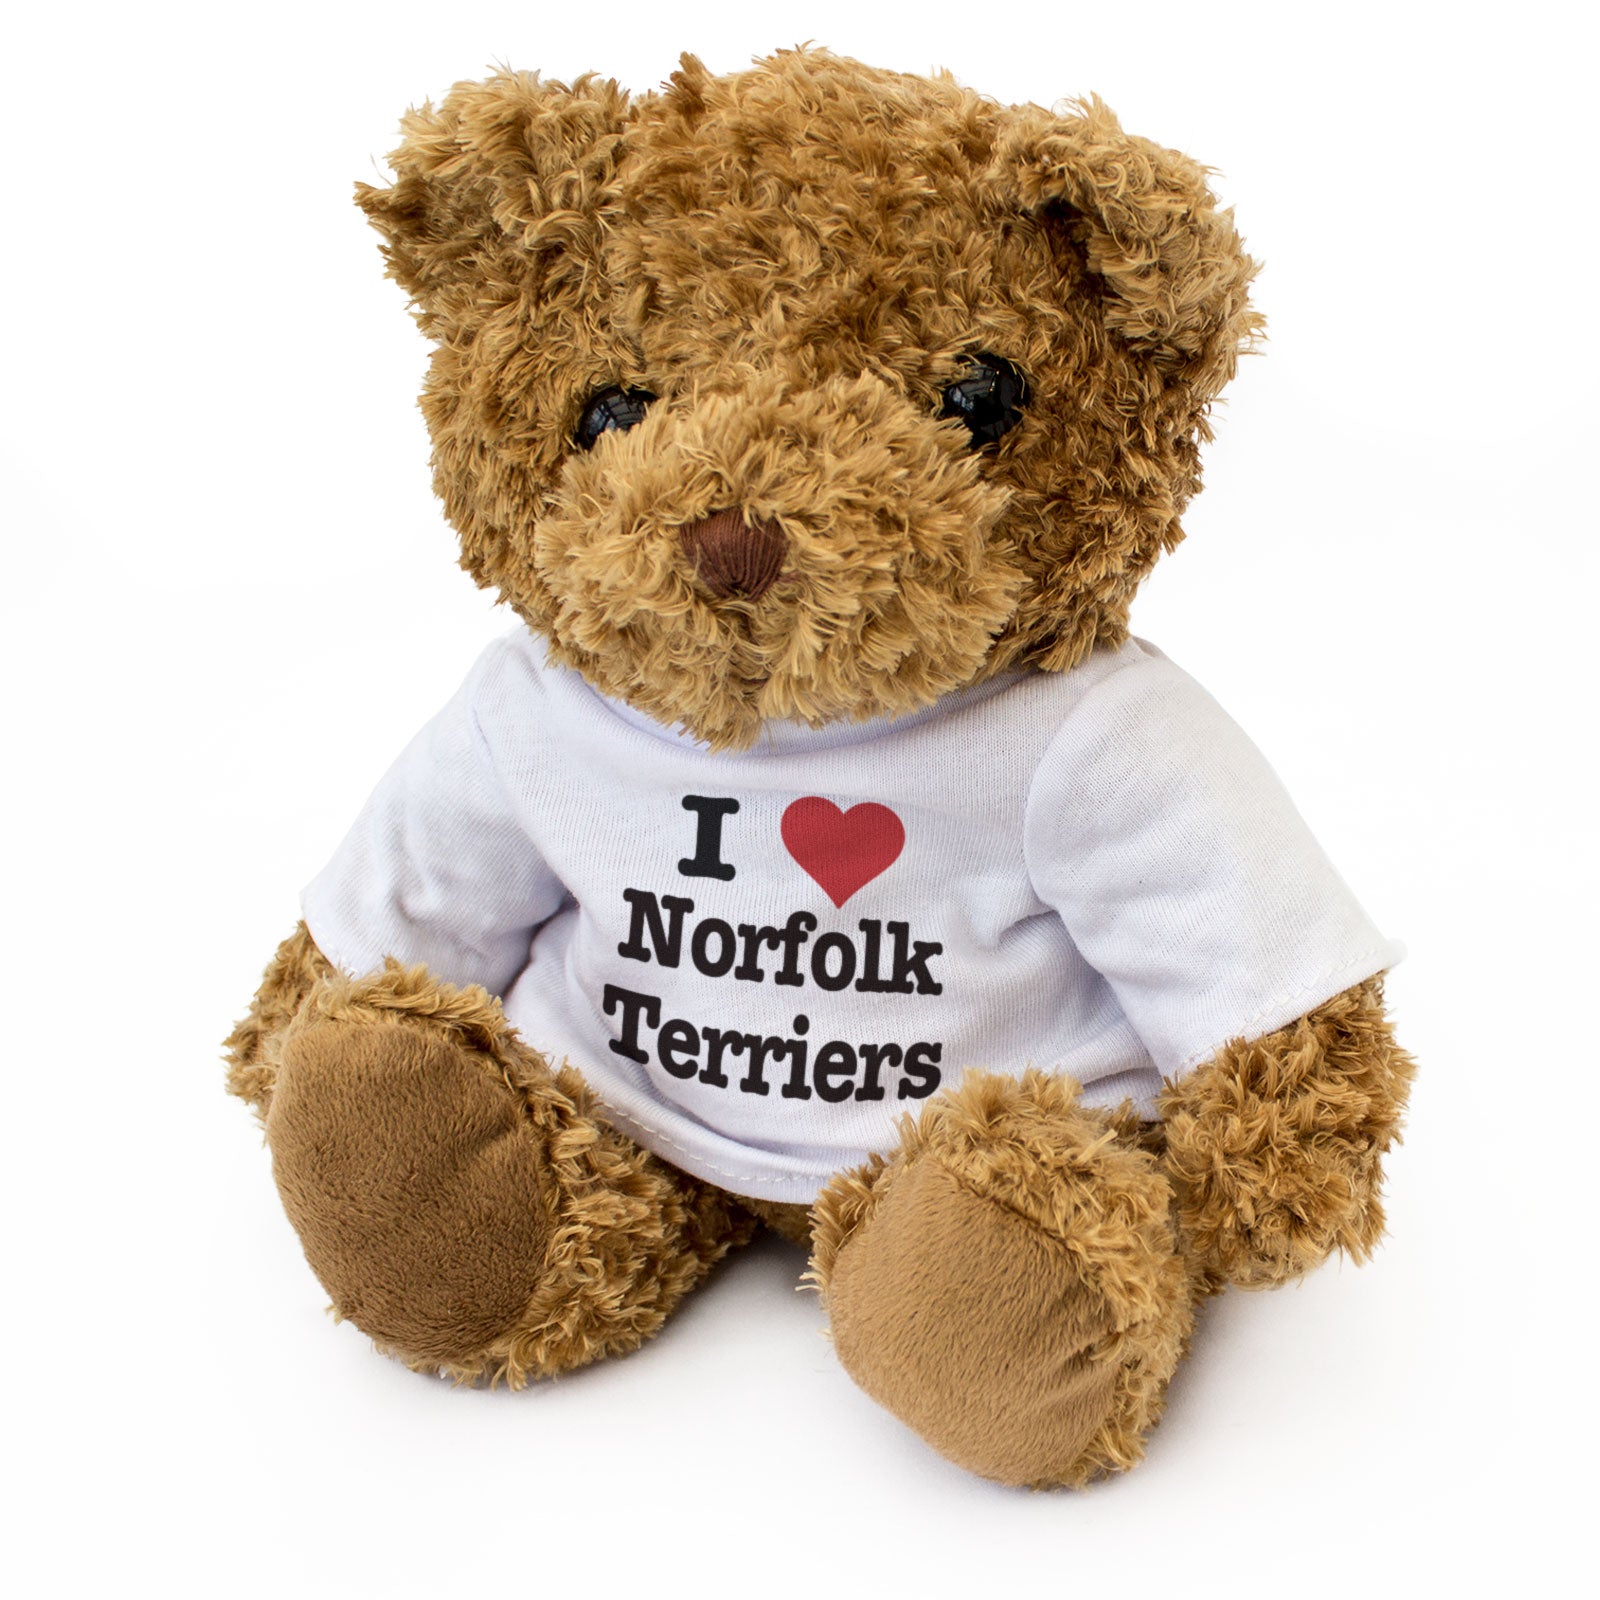 I Love Norfolk Terriers - Teddy Bear